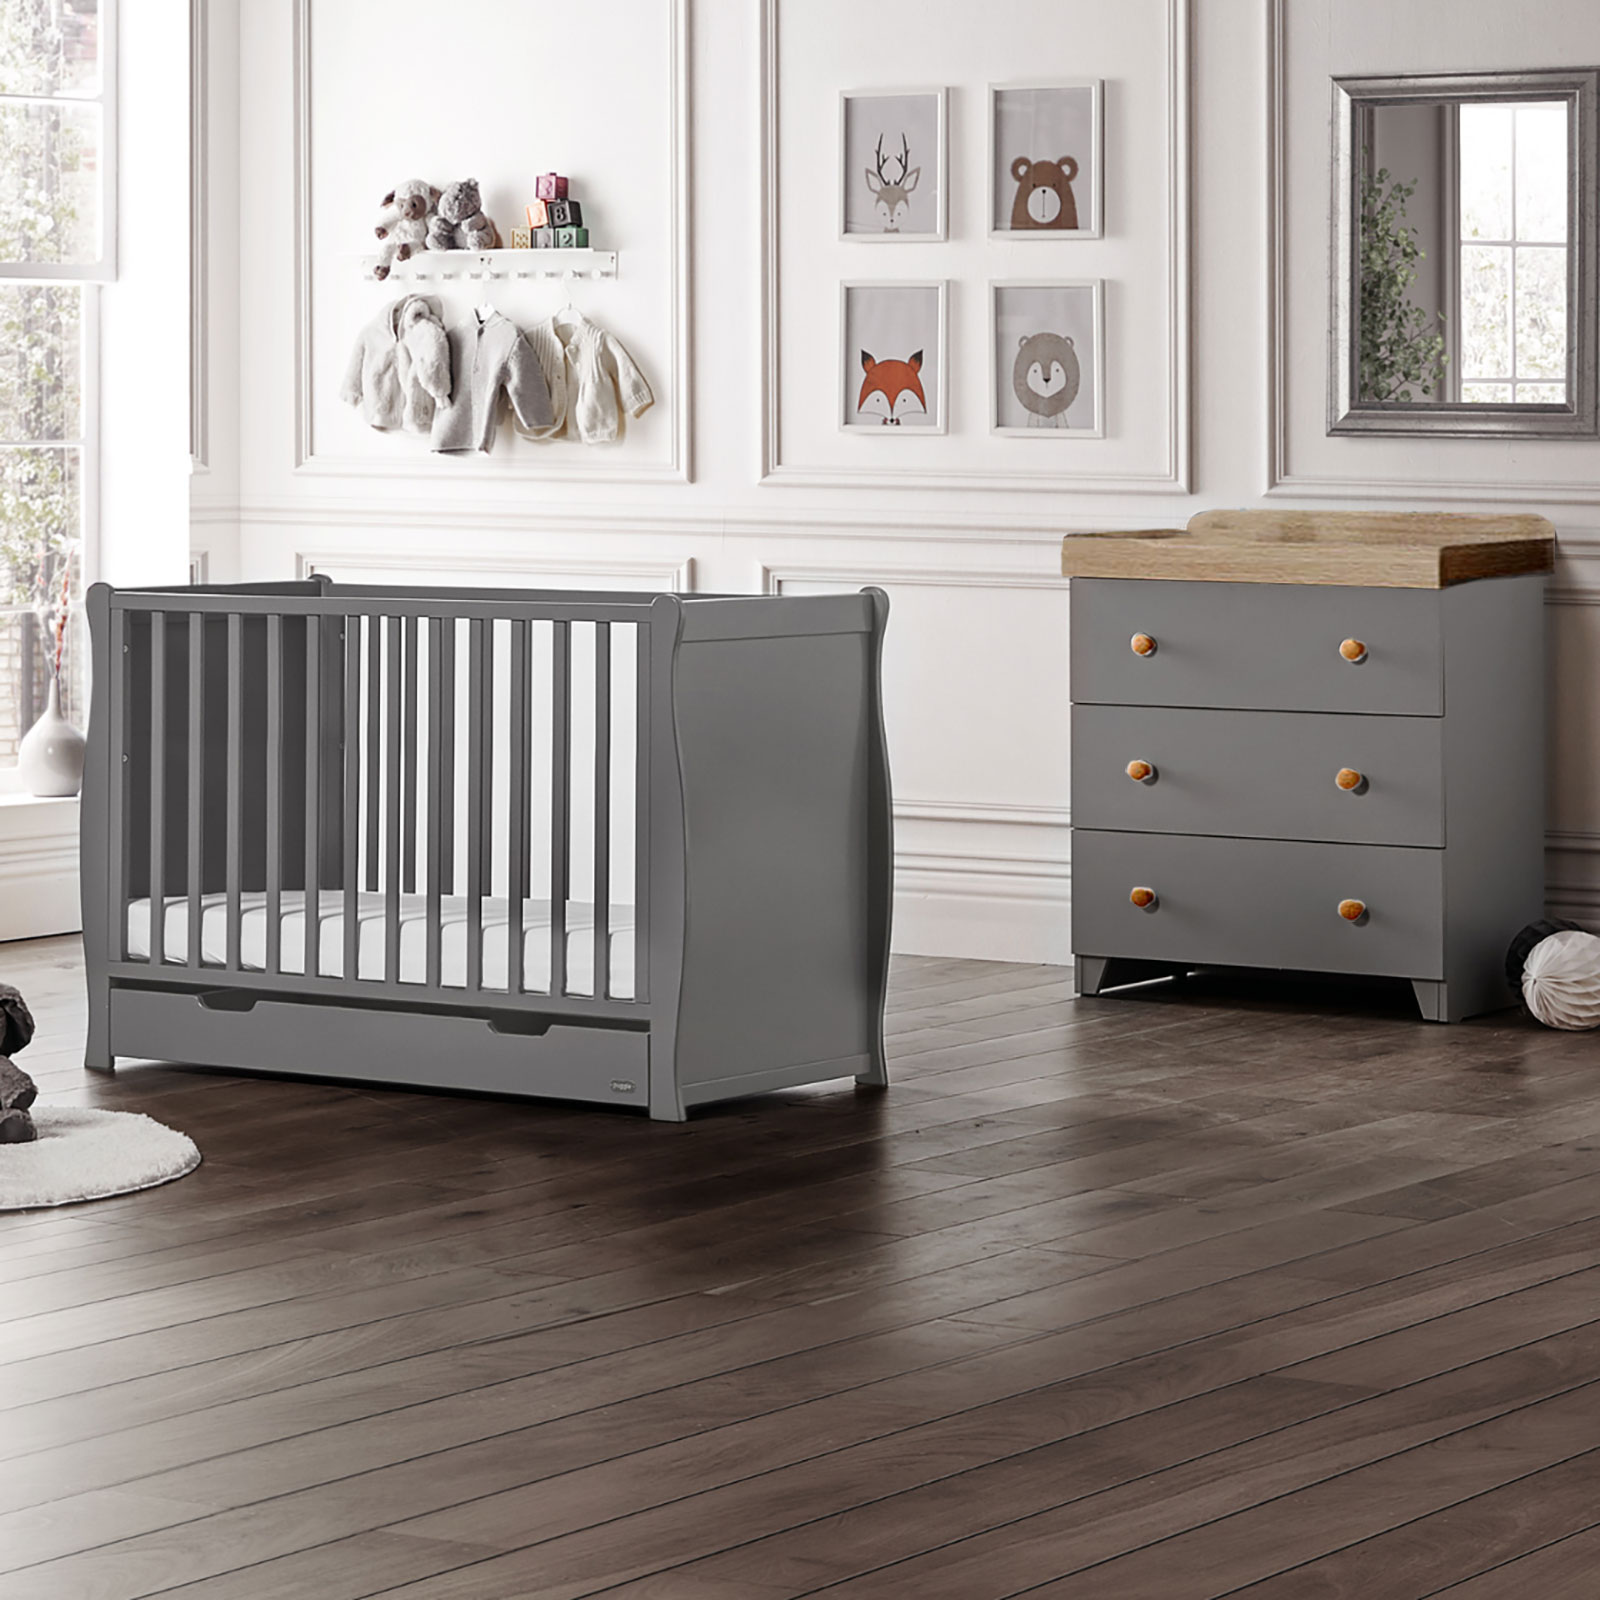 Puggle Chelford Sleigh Cot 5 Piece Nursery Furniture Set With Maxi Air Cool Mattress - Grey/Grey & Oak